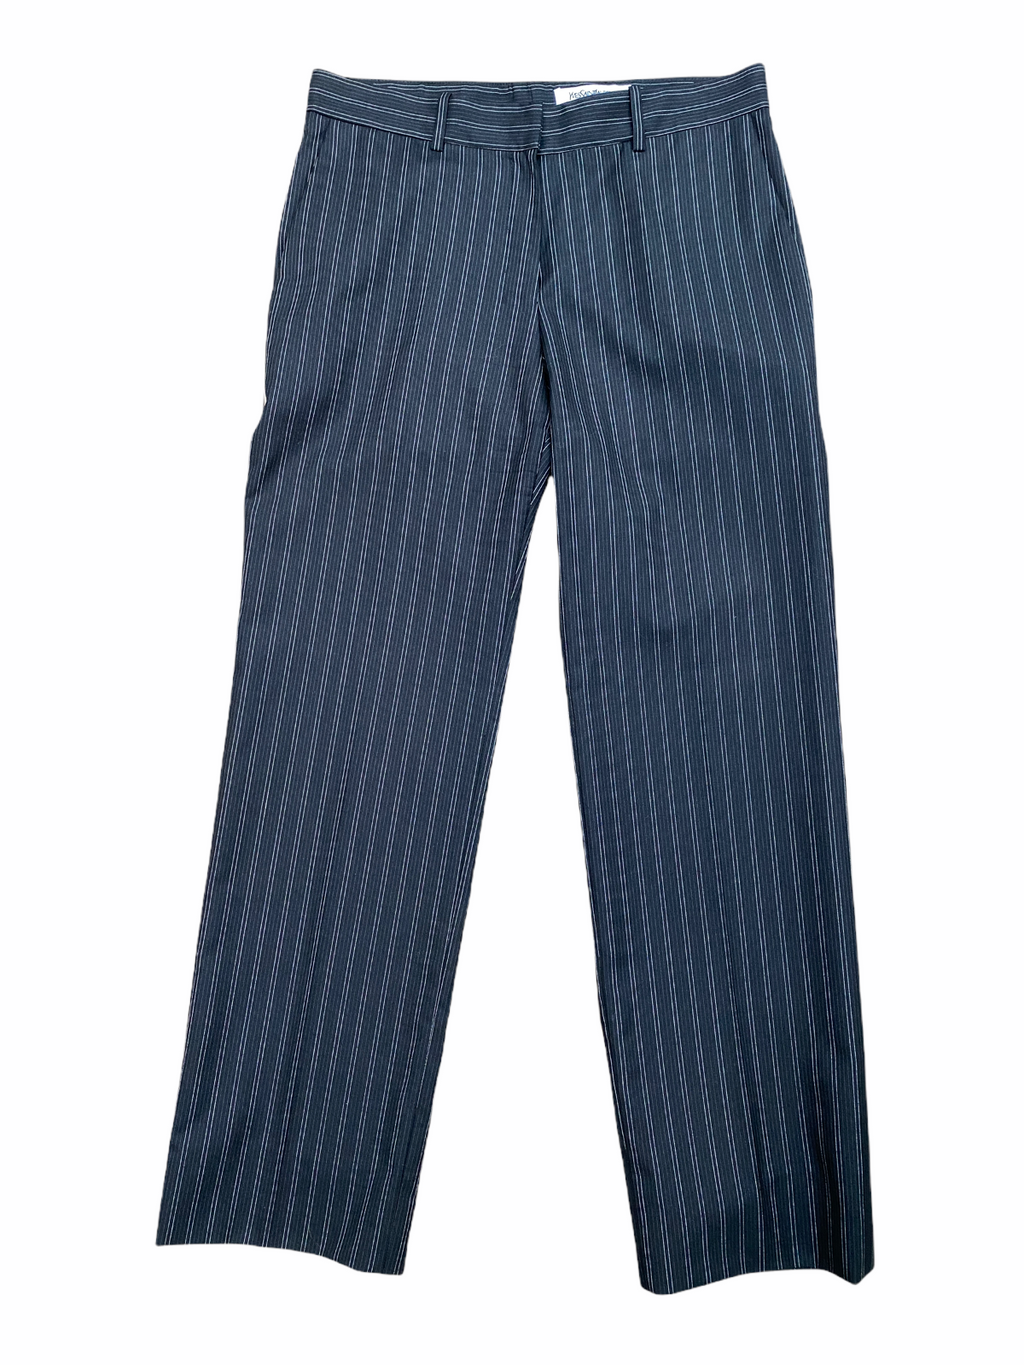 Black Wool Striped Pants  Size US 26 27